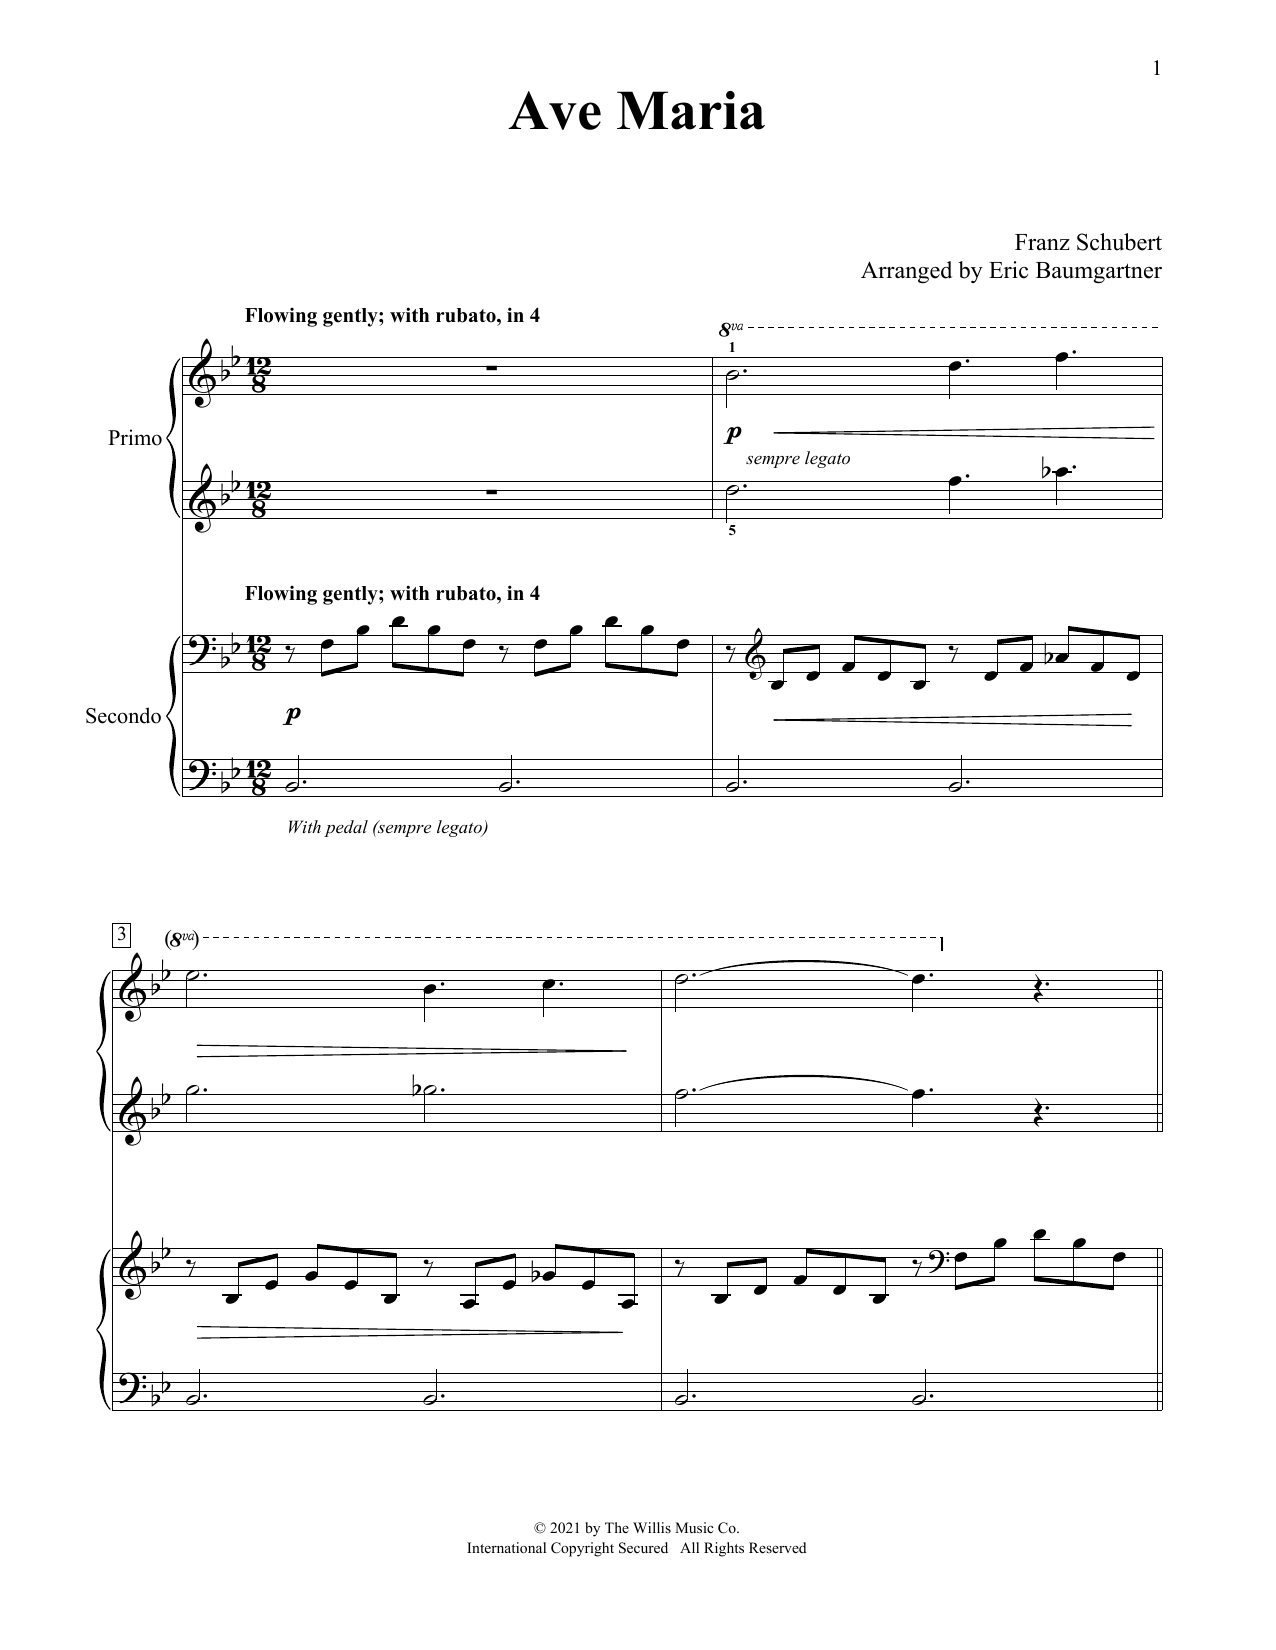 Franz Schubert Ave Maria (arr. Eric Baumgartner) Sheet Music Notes & Chords for Piano Duet - Download or Print PDF